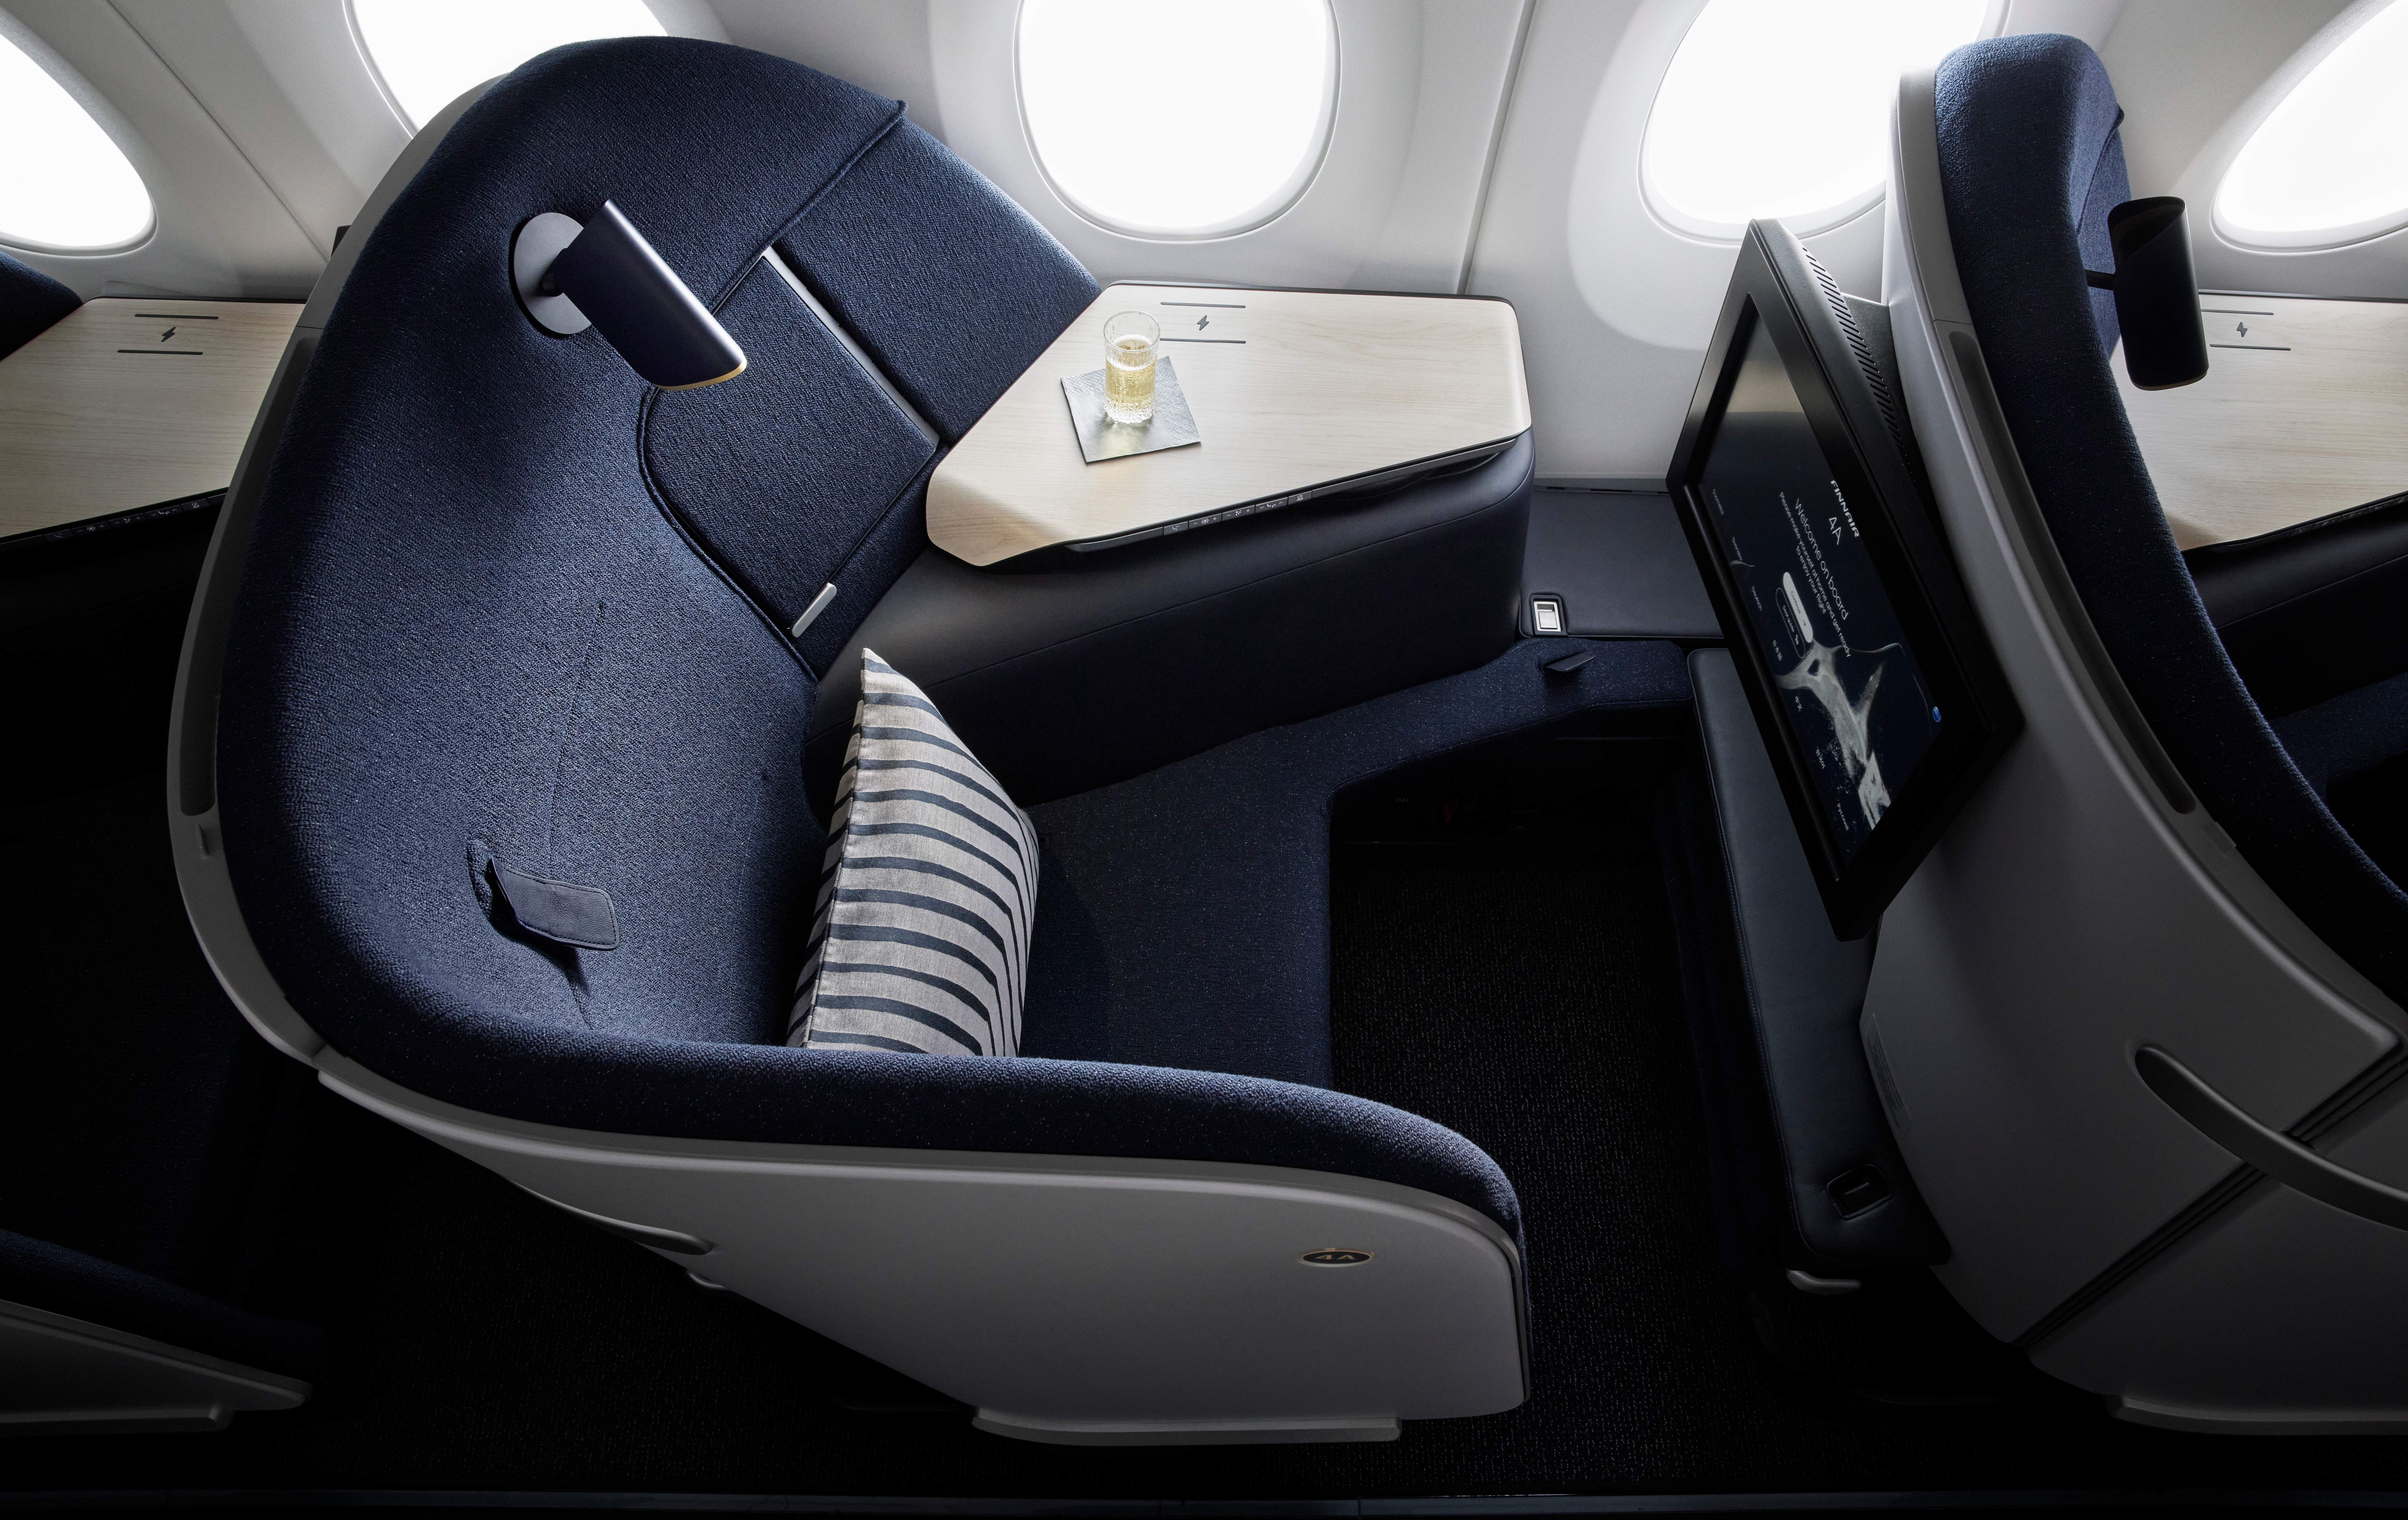 finnair-business-class-airlounge-seat-ultima-thule.jpg